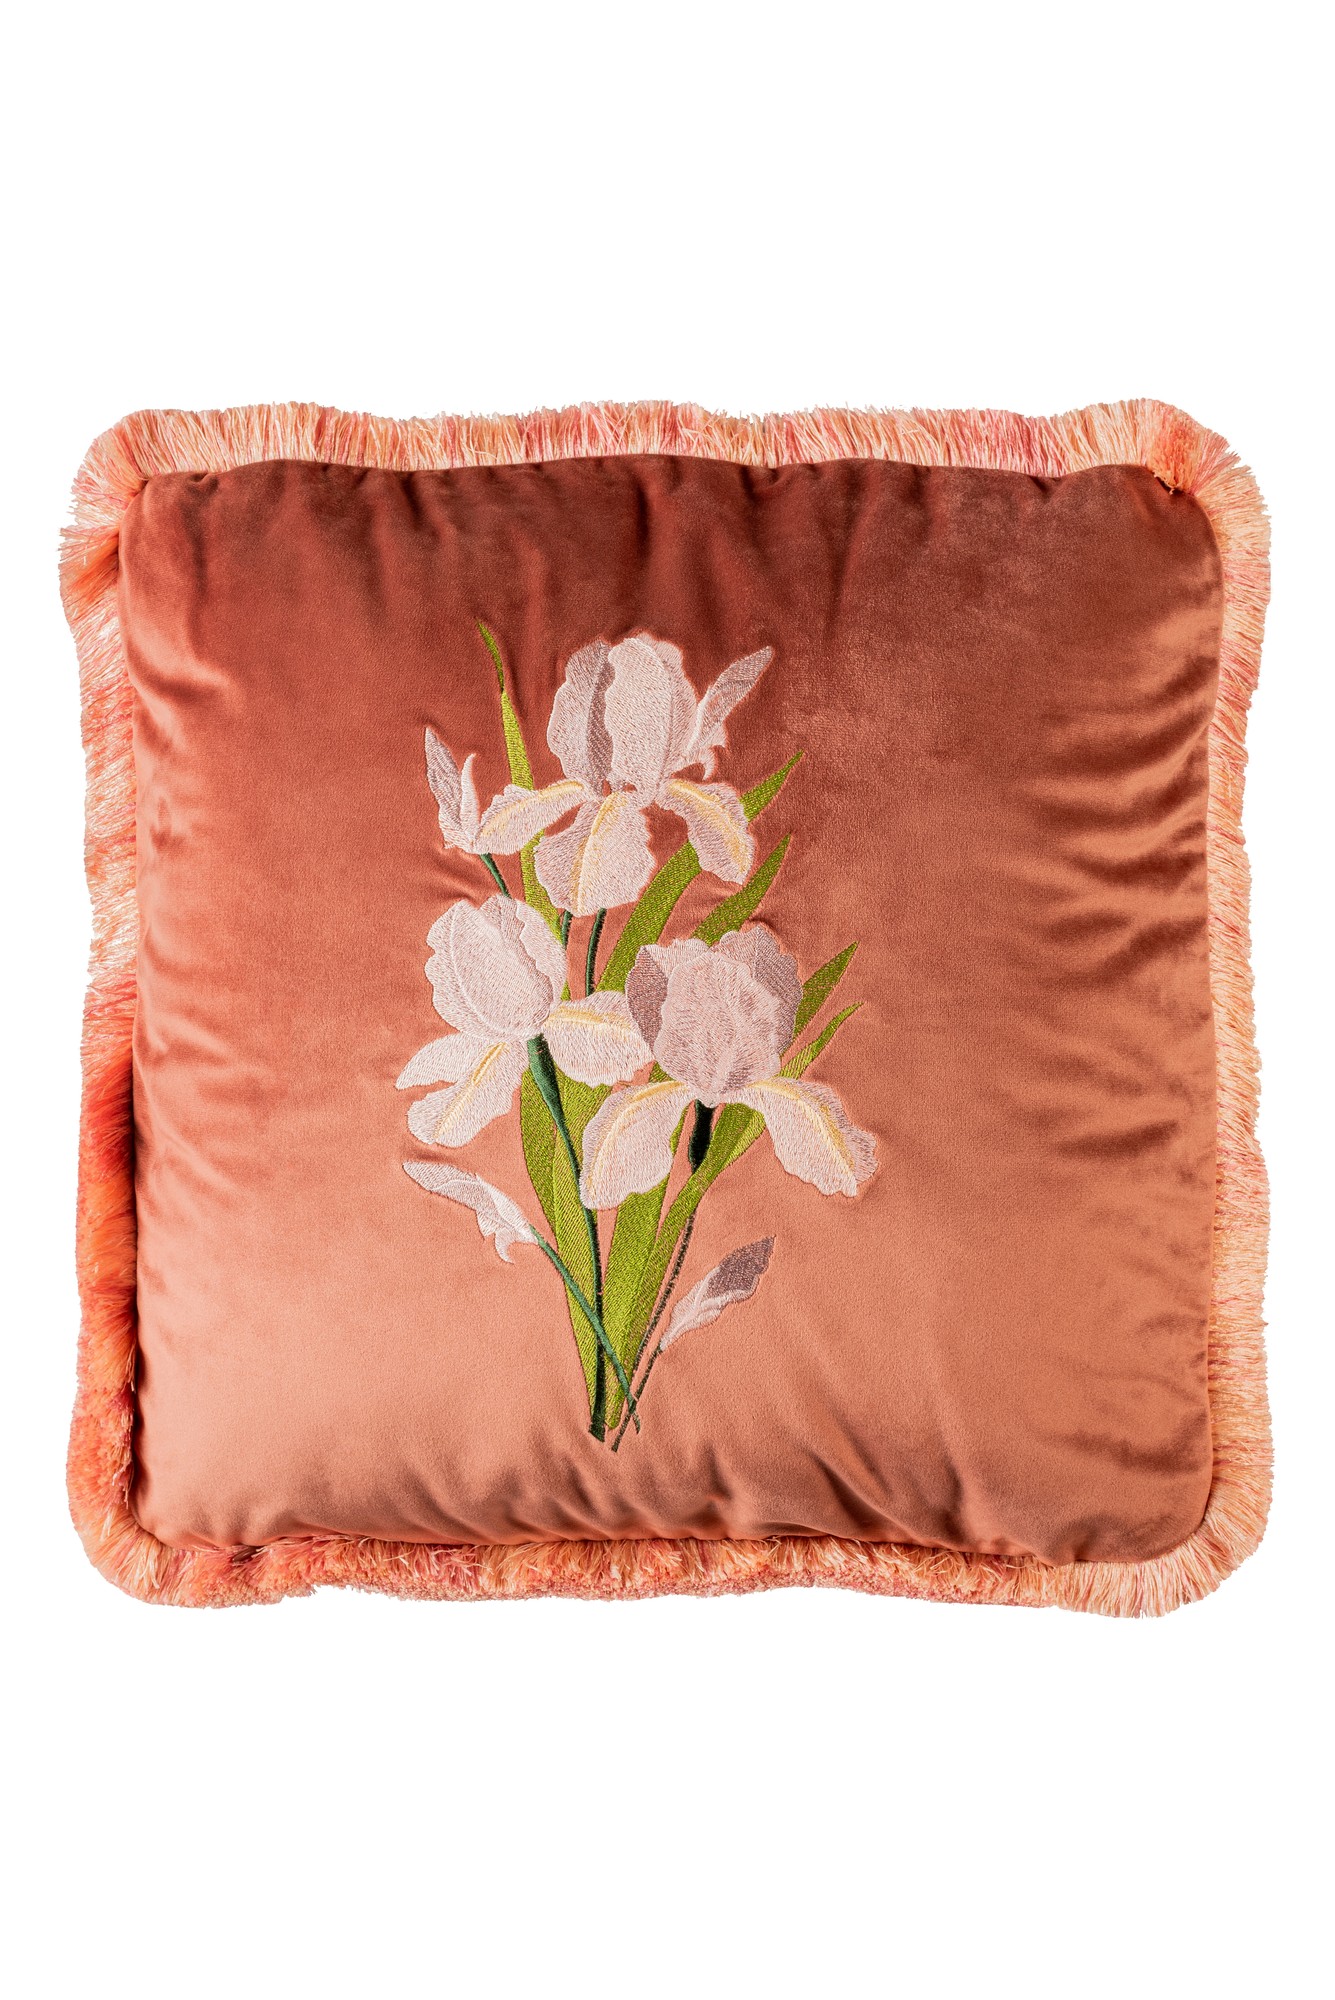 MR Pillow velvet with irises embroidery